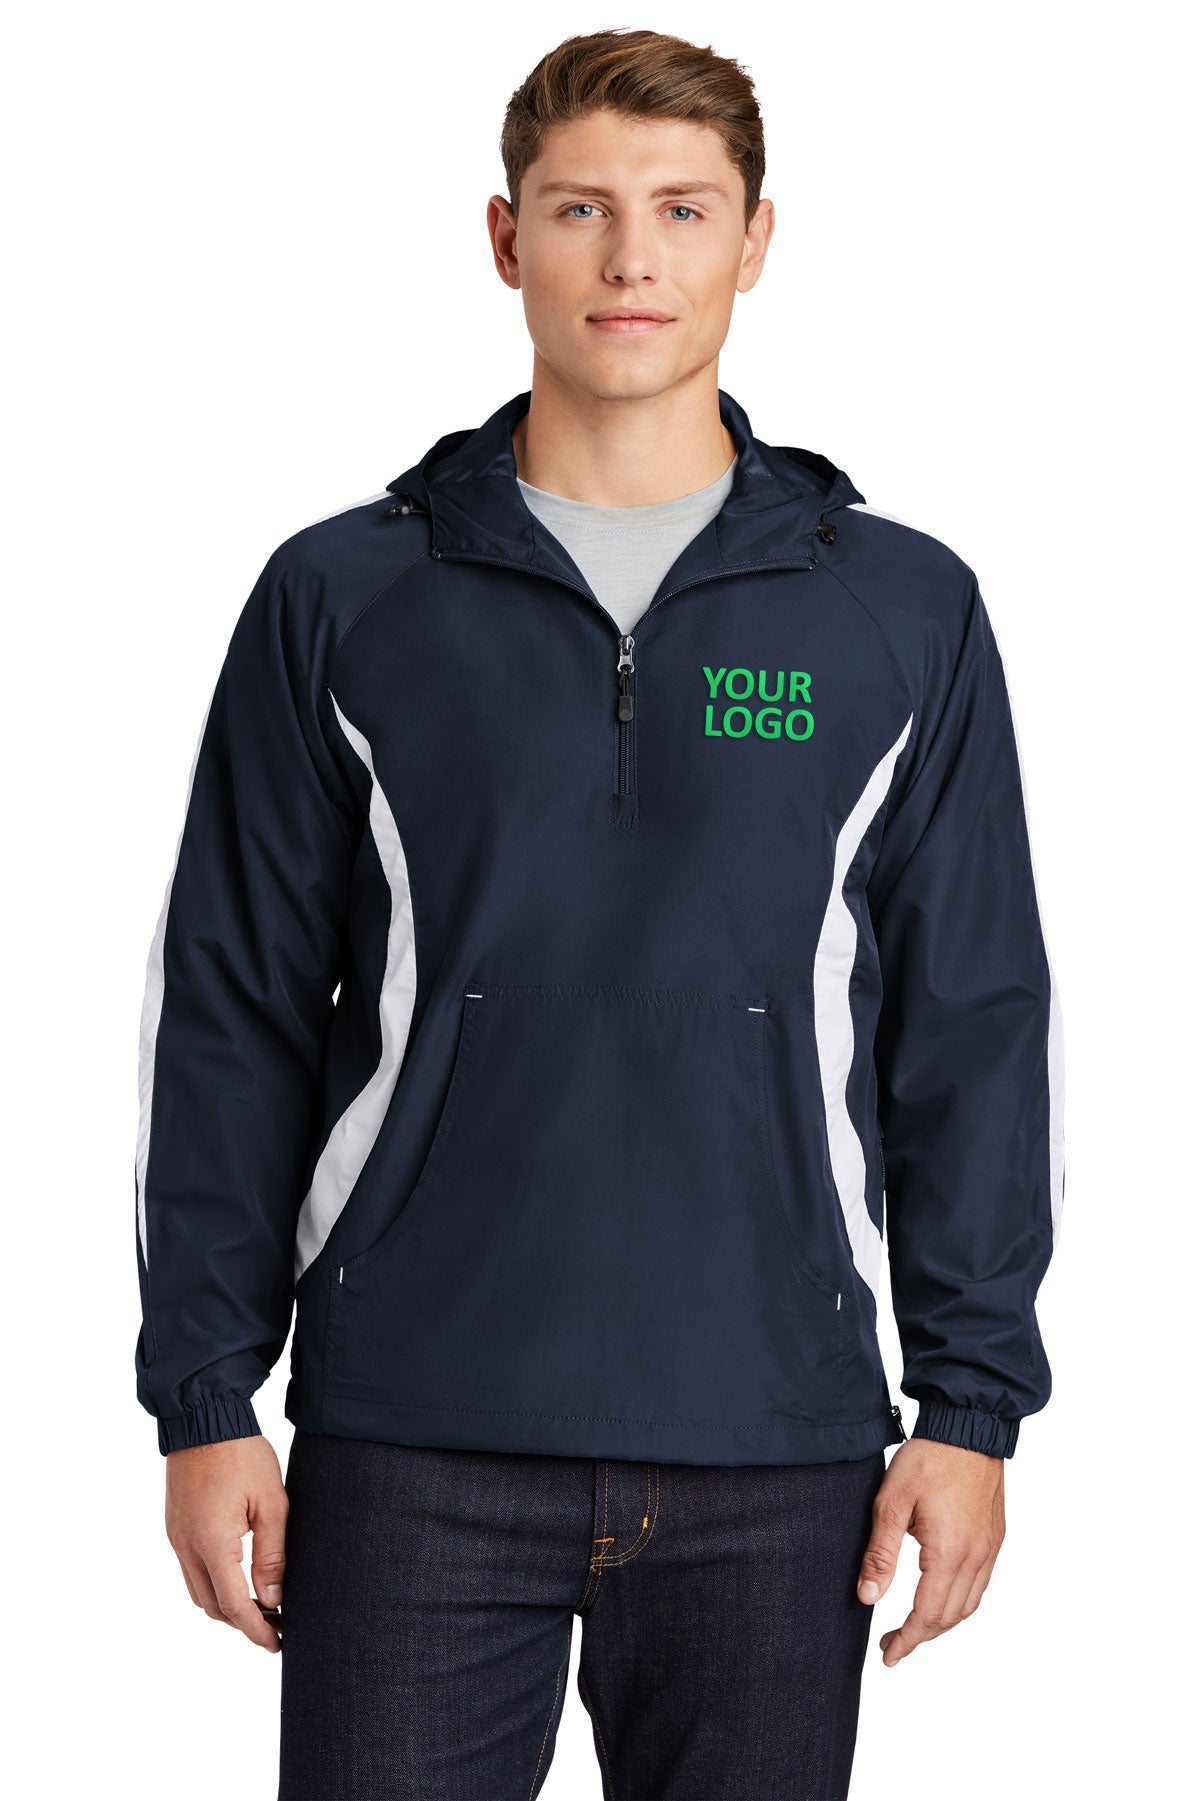 Sport-Tek True Navy/White JST63 jacket company logo